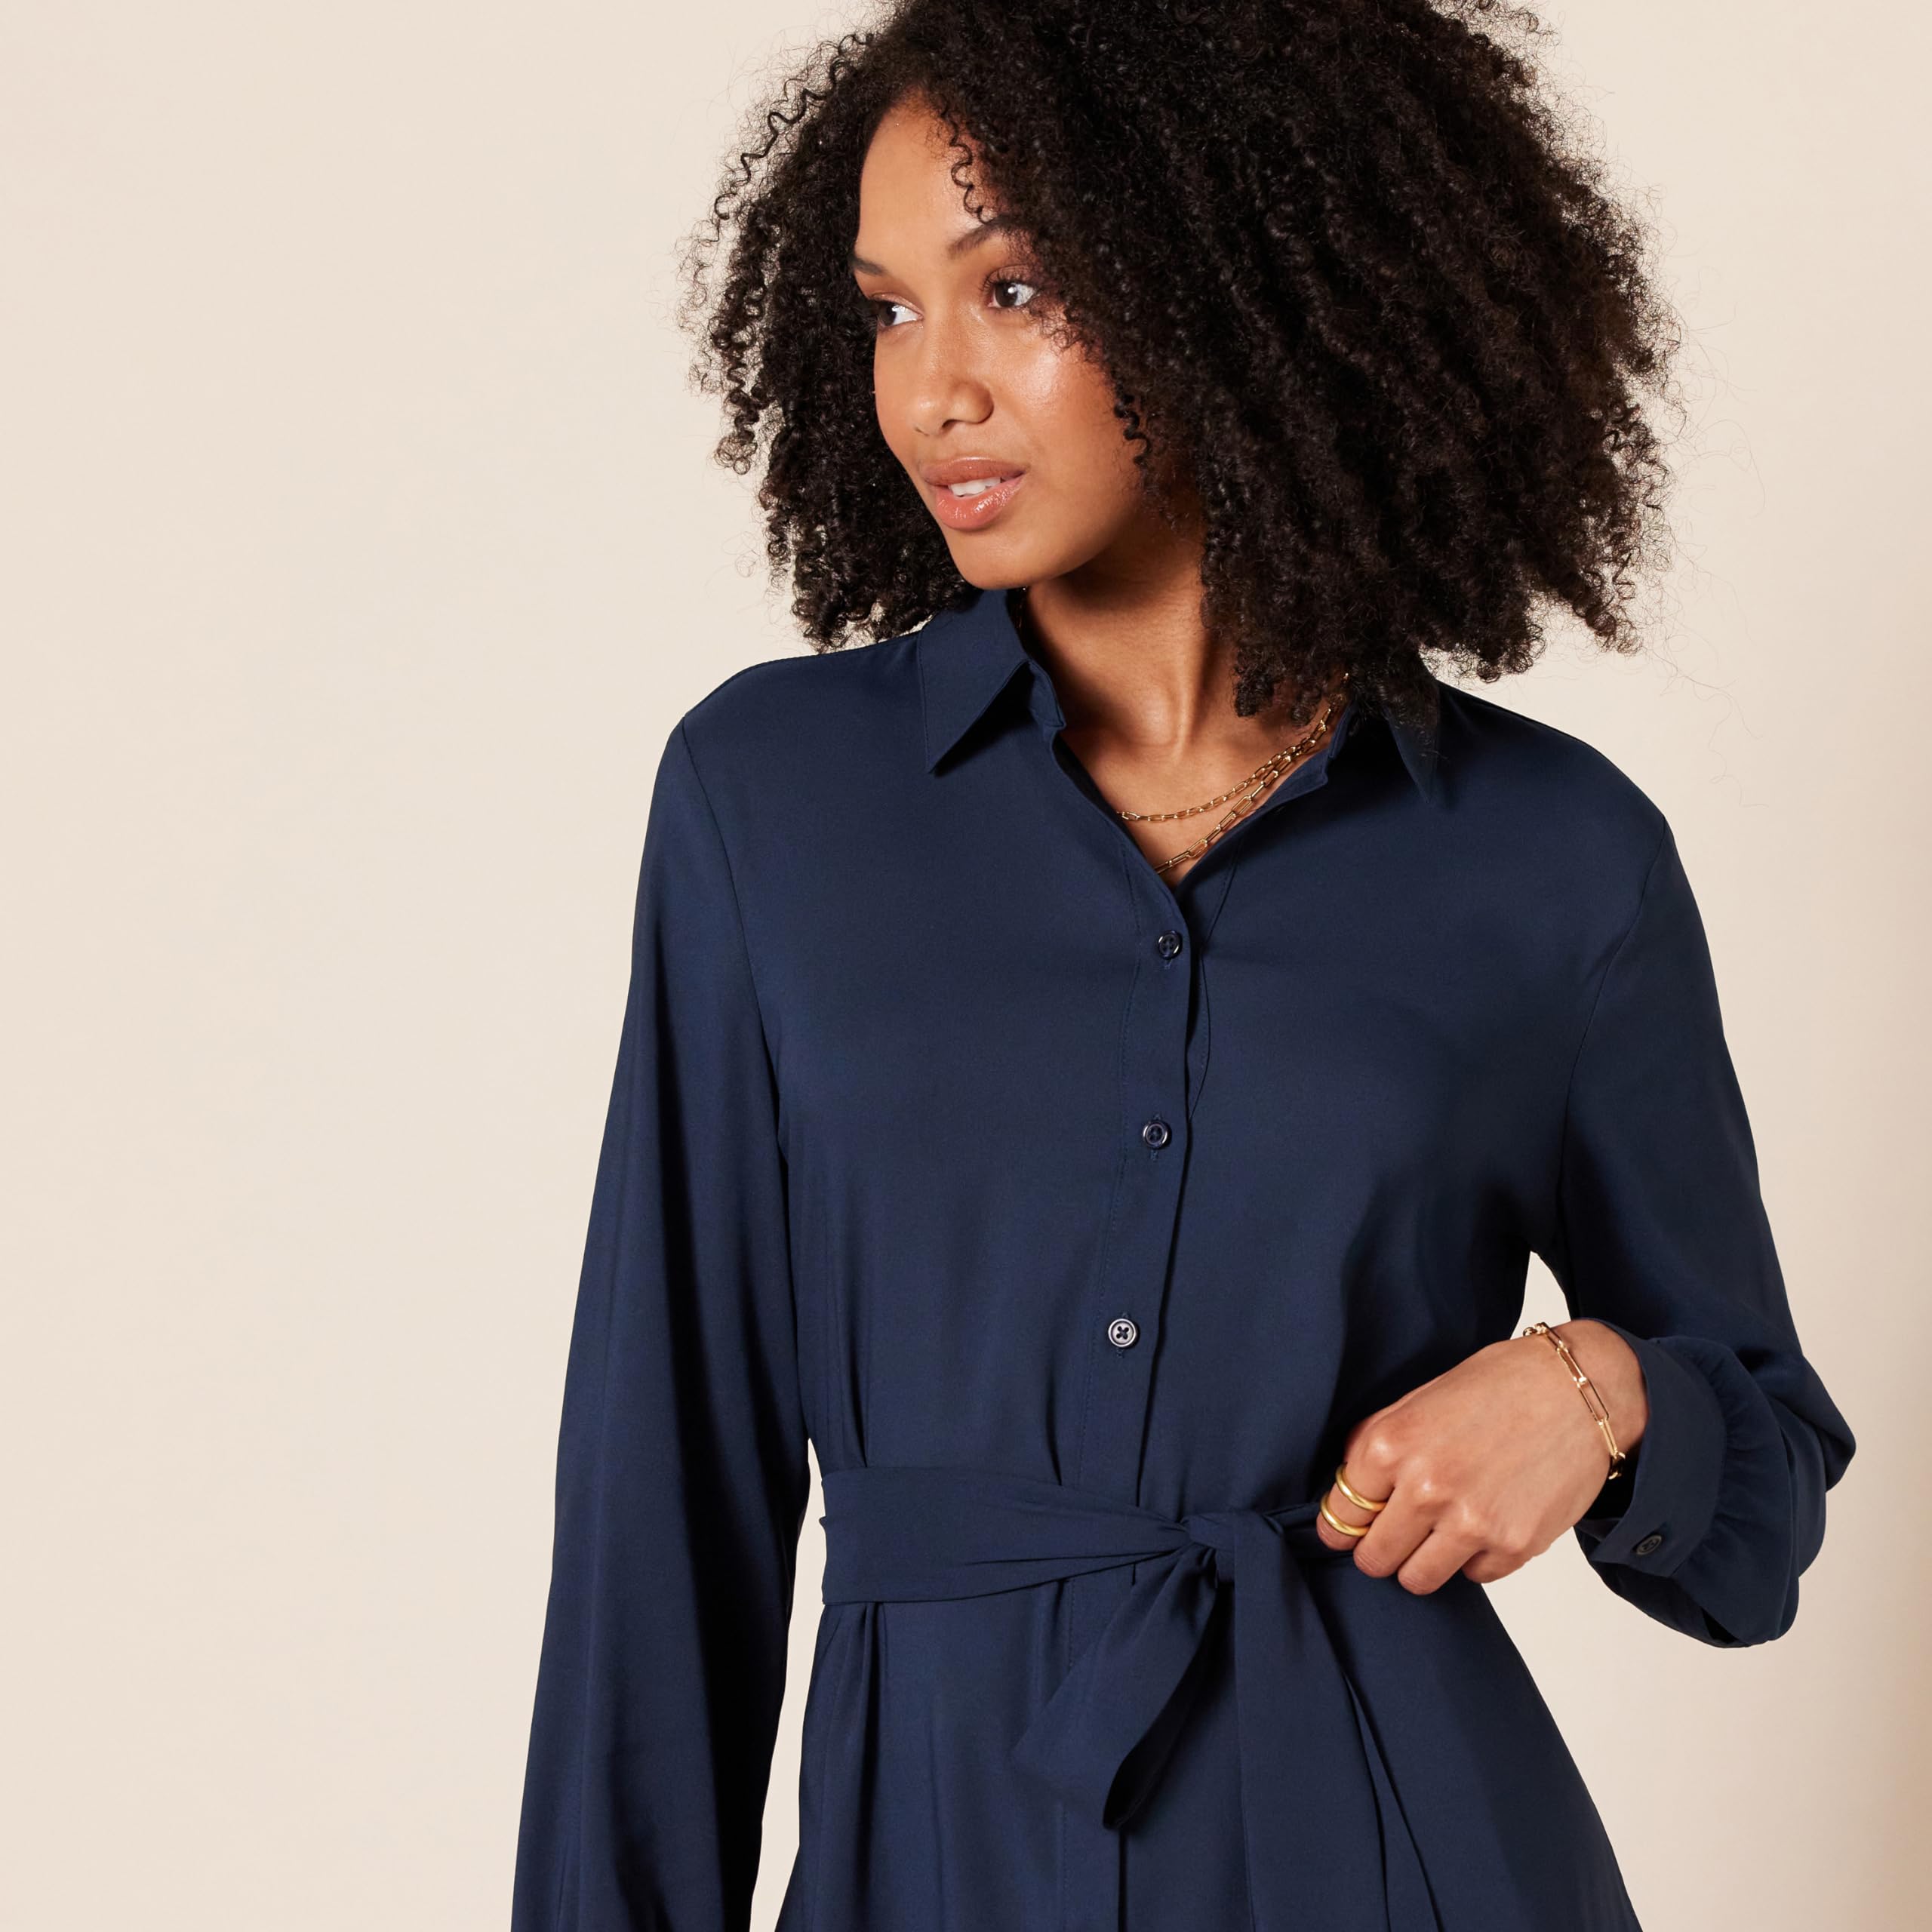 Amazon Essentials Women's Georgette Long Sleeve Midi Length Shirt Dress